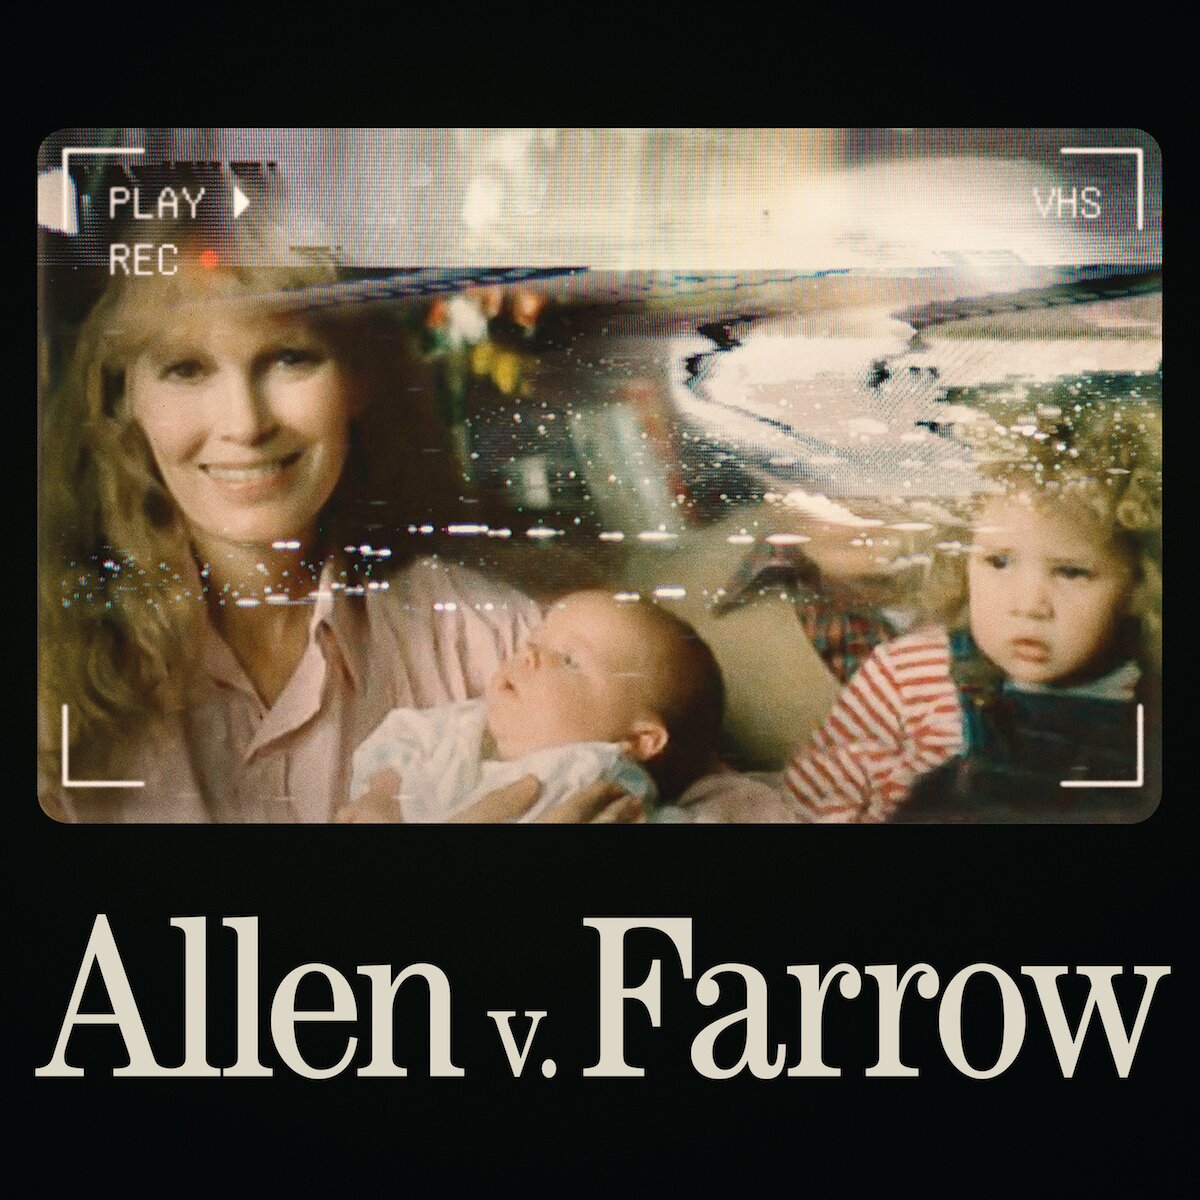 Allen V. Farrow